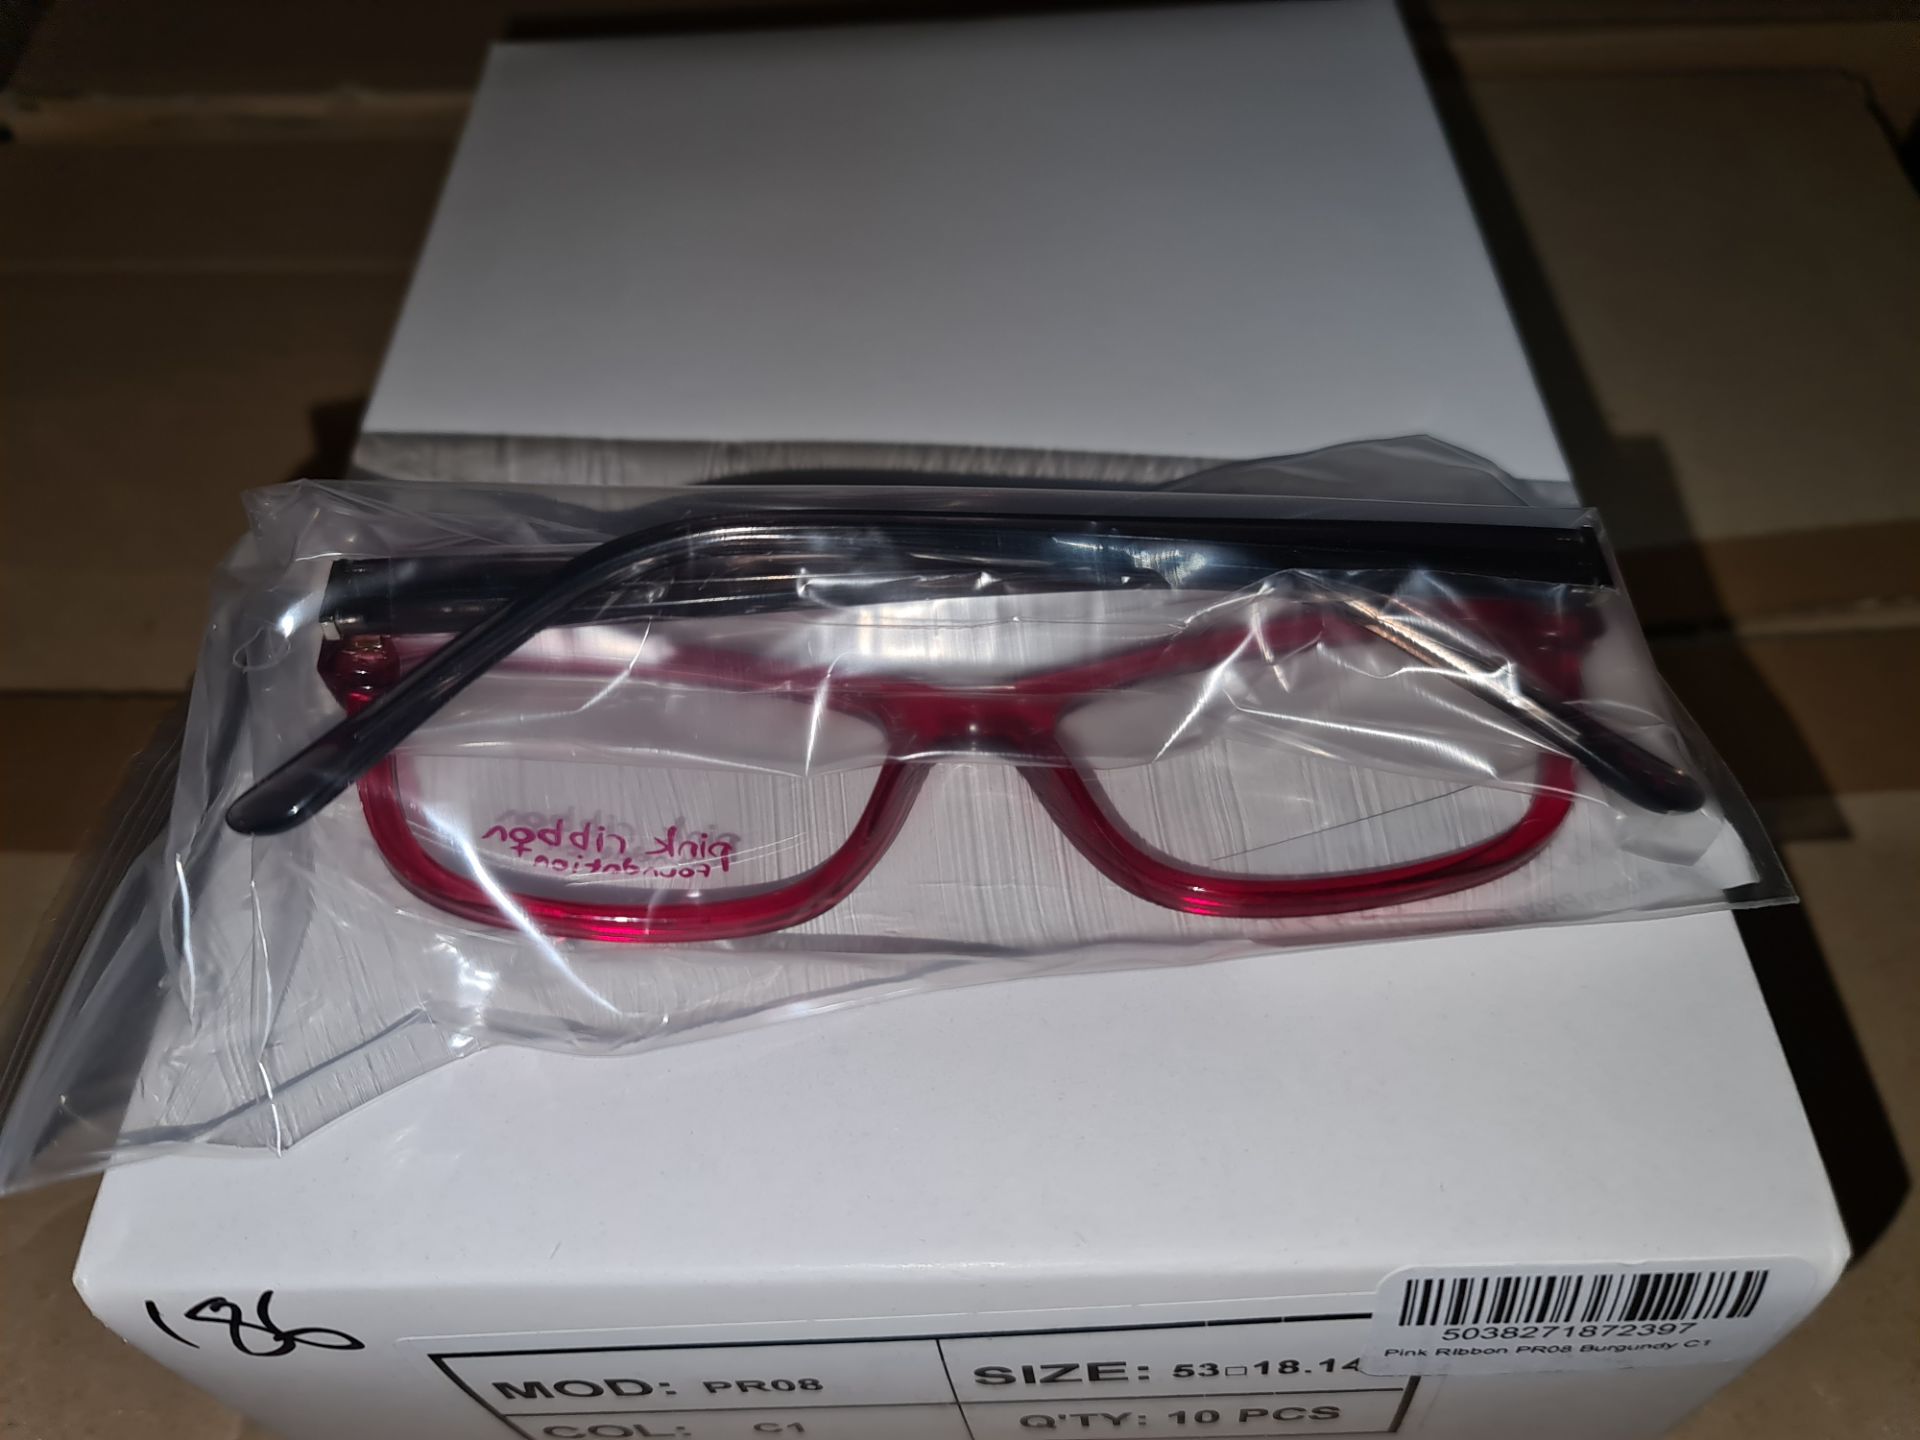 440,000 Prescription Glasses Frames: The total stock of frames from DD Frames Ltd in administration - Image 99 of 221